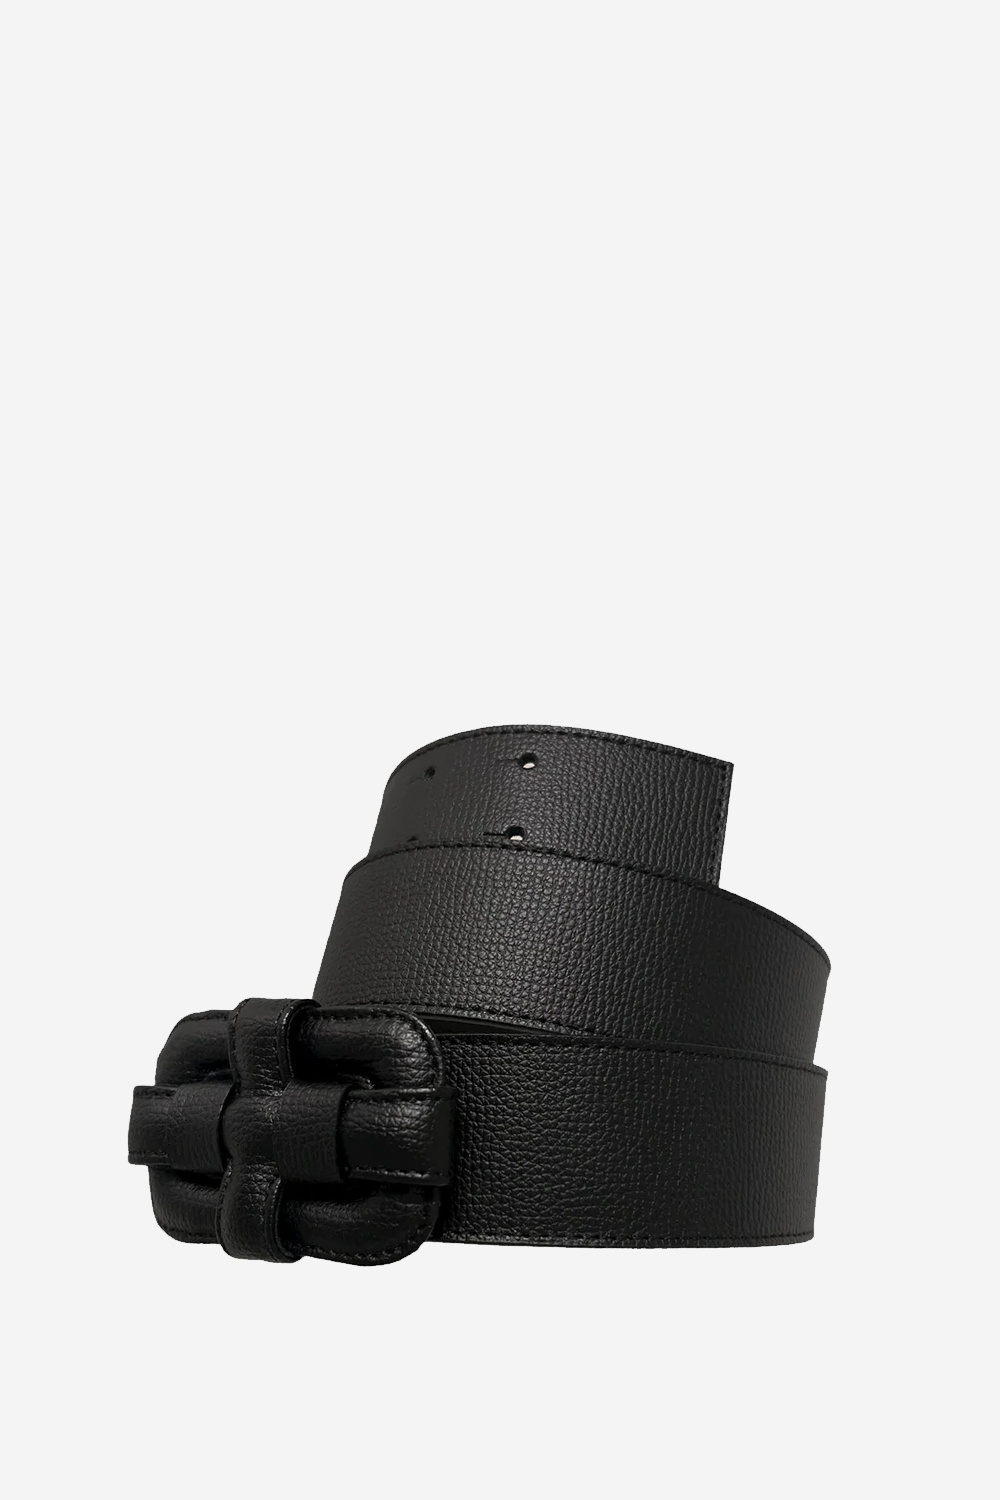 Morobe Belts Black